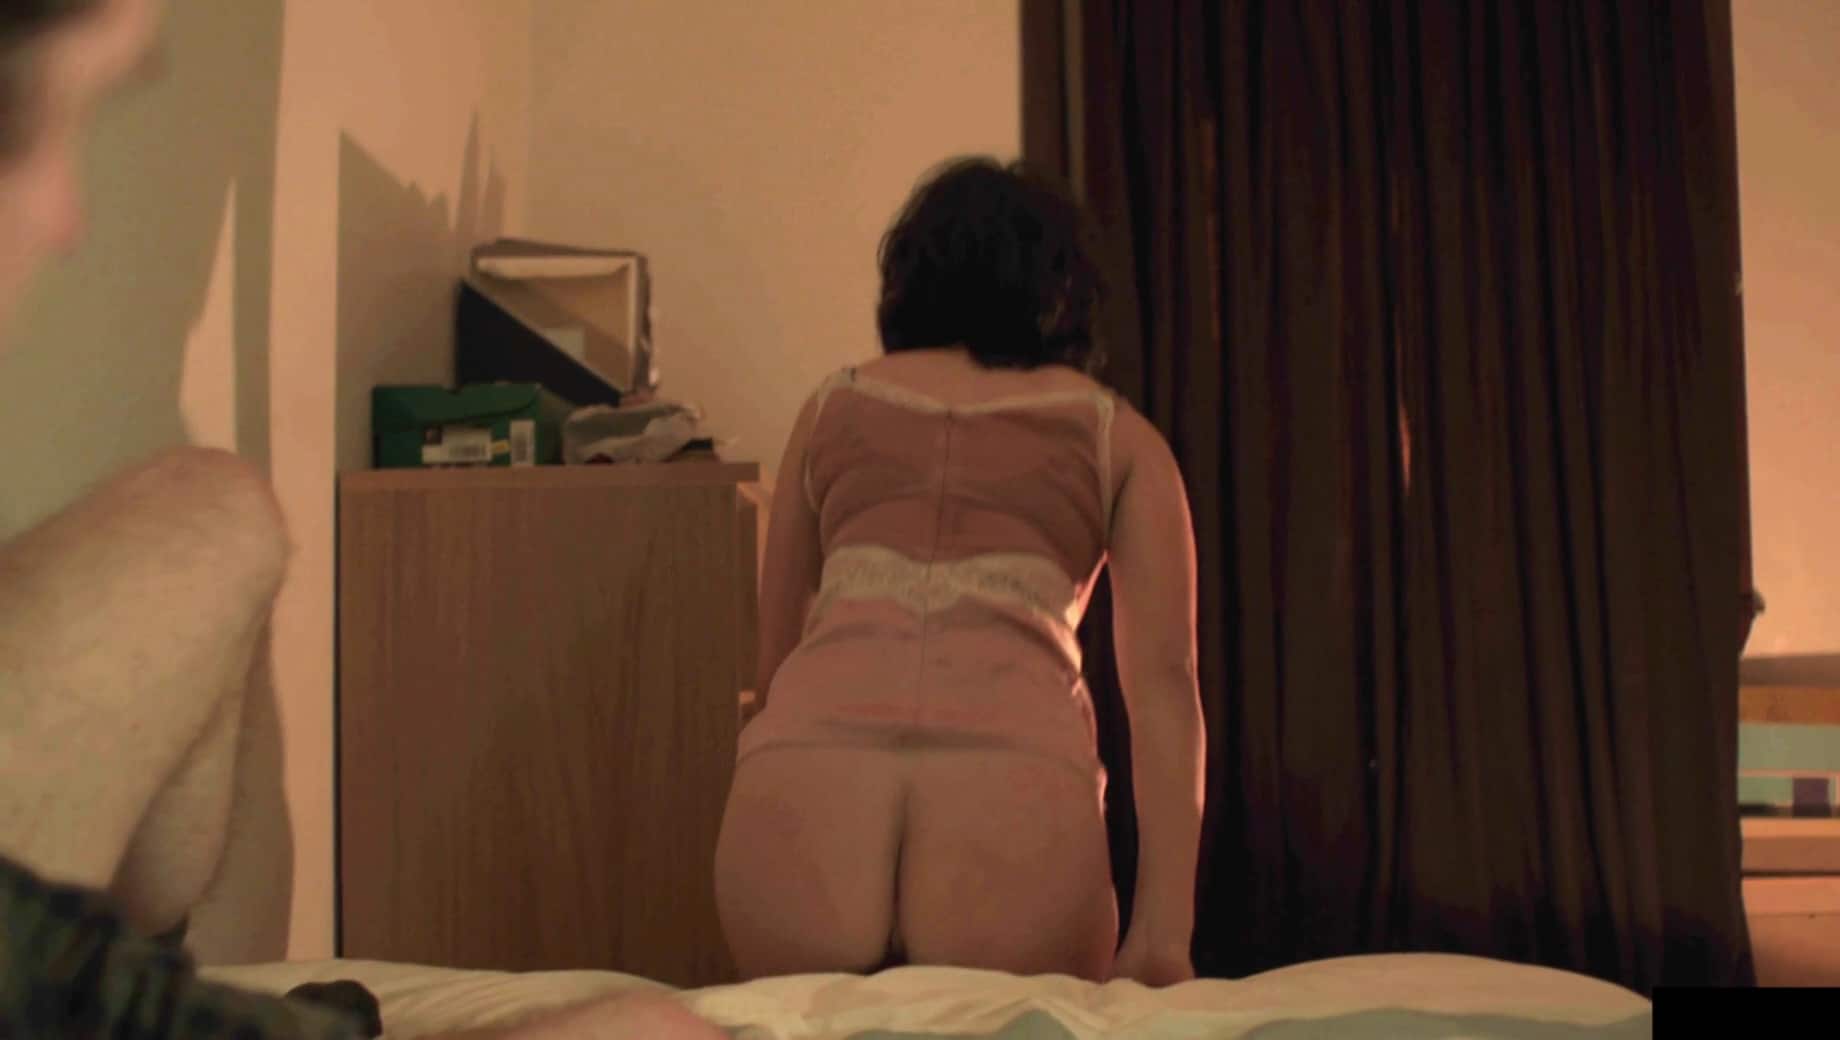 The ravishing Scarlett Johansson showing her ass off in a dark room